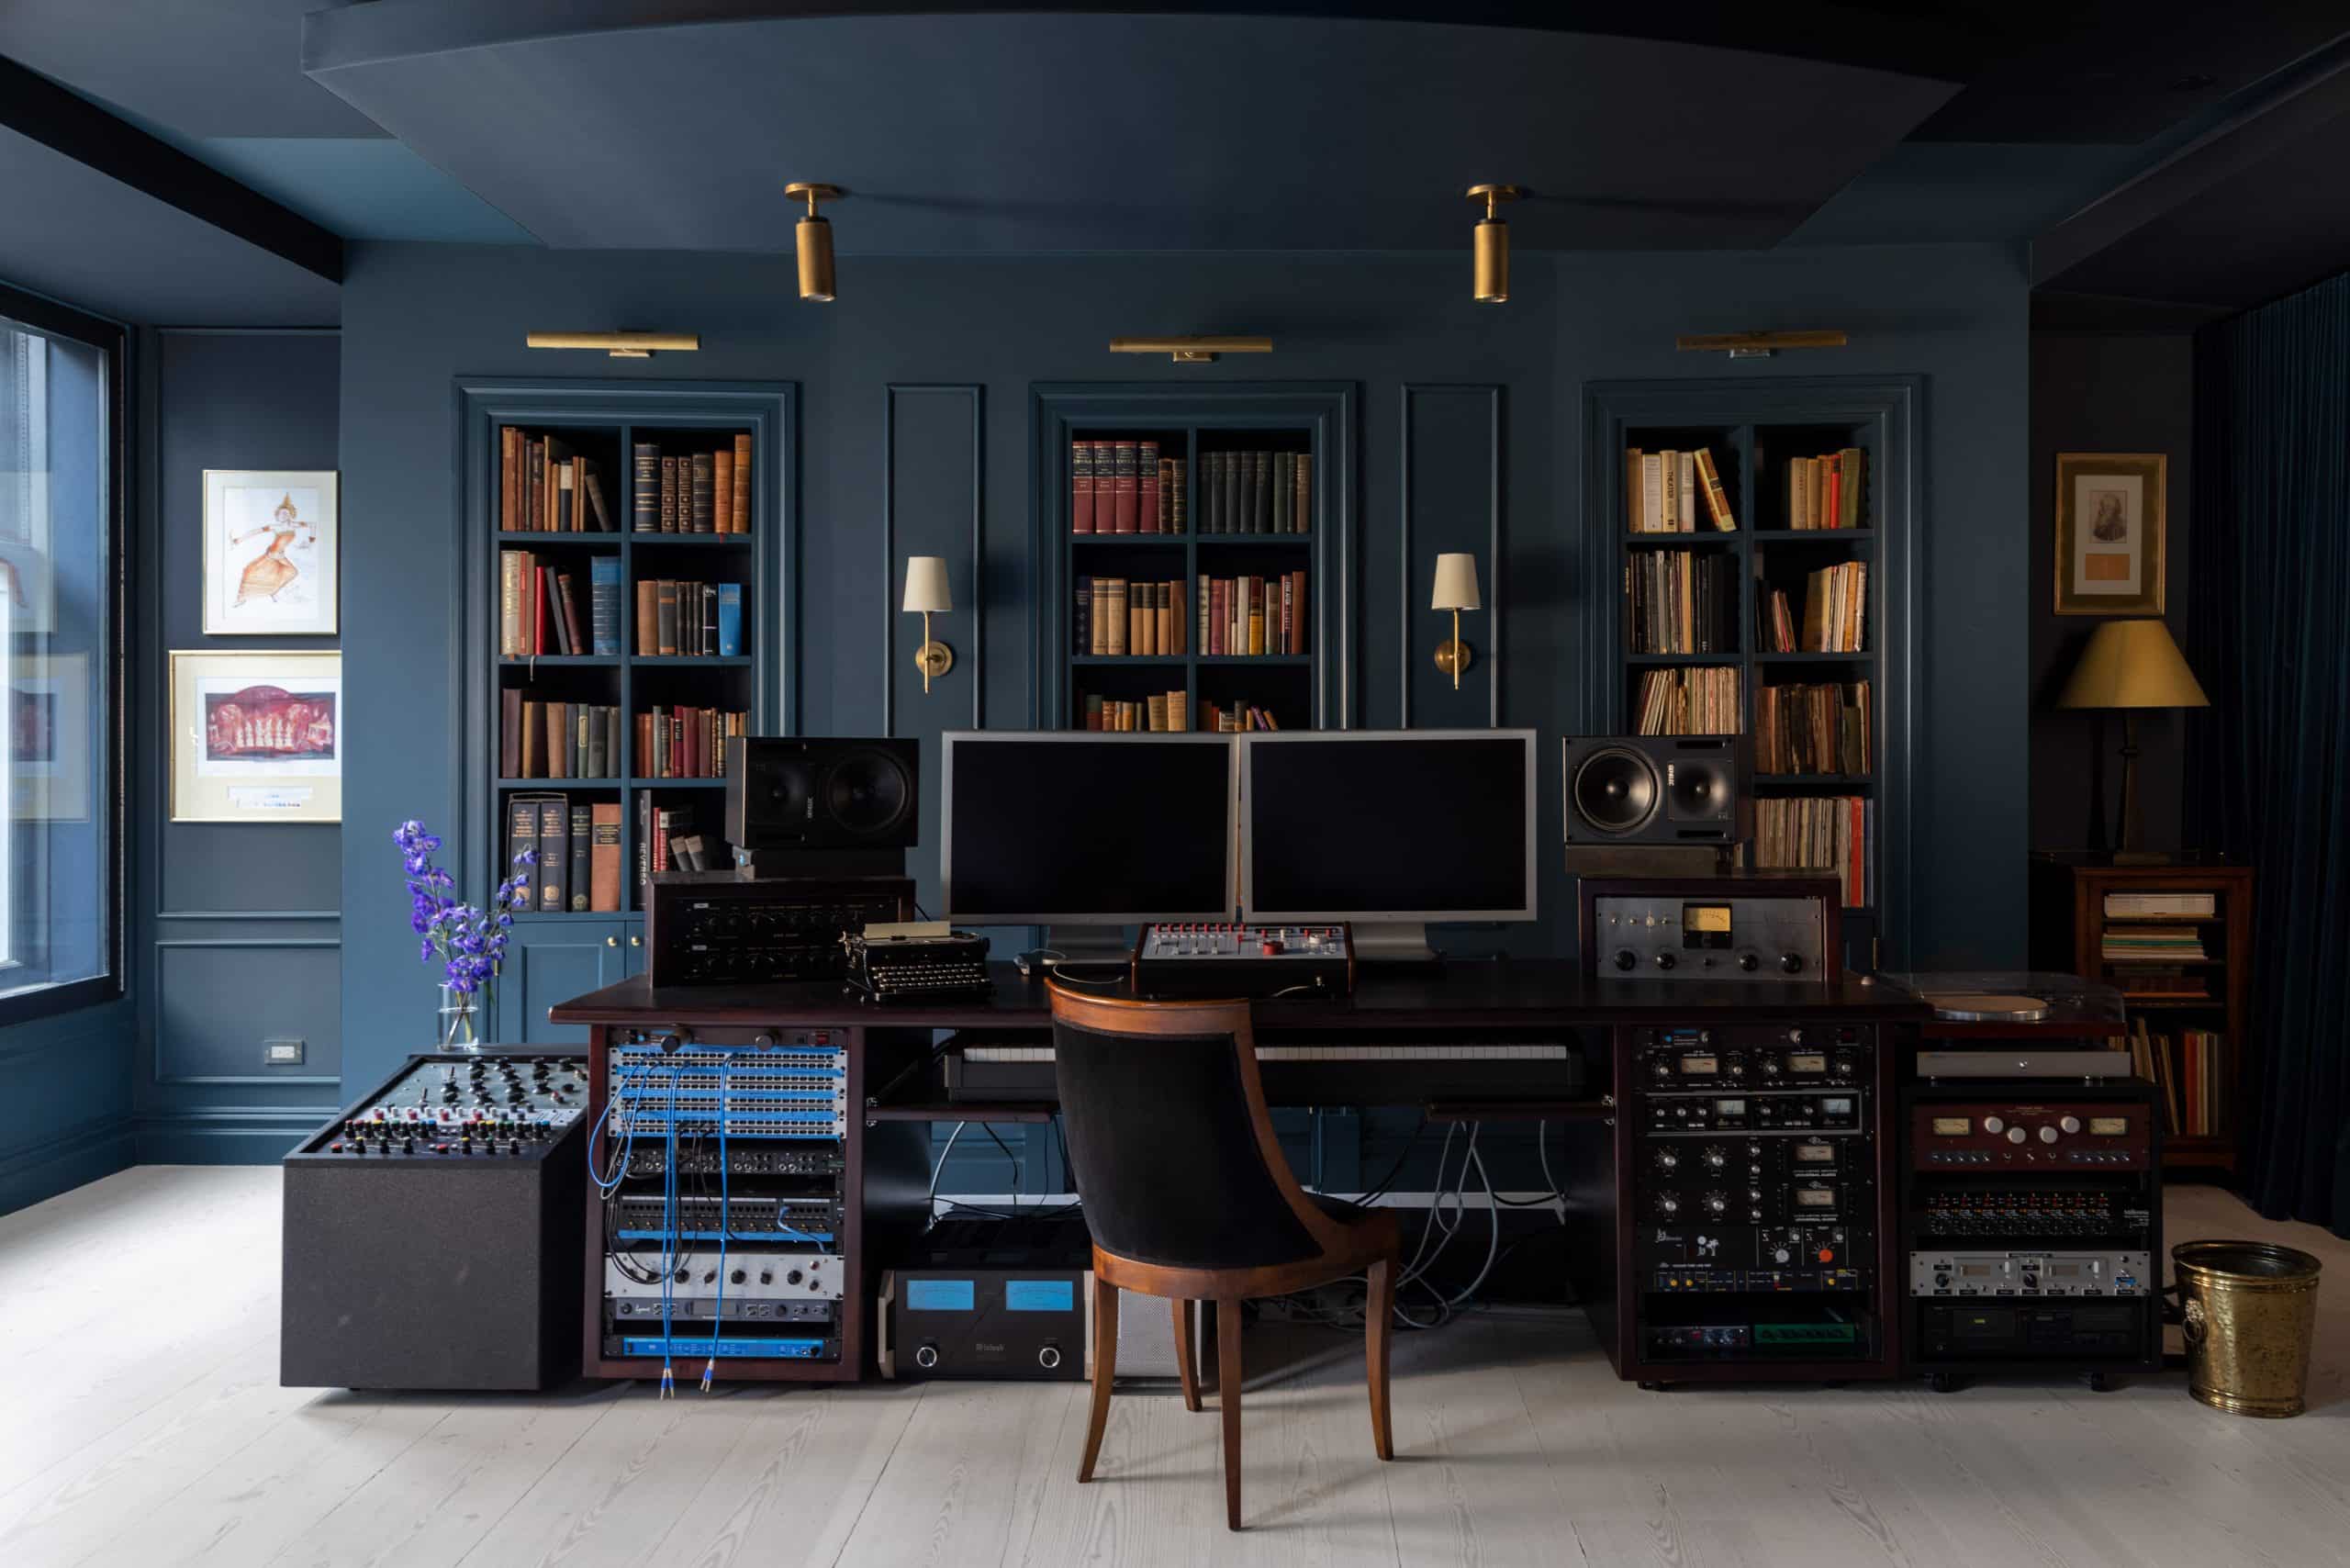 Soho recording studio and loft home designed by White Arrow.